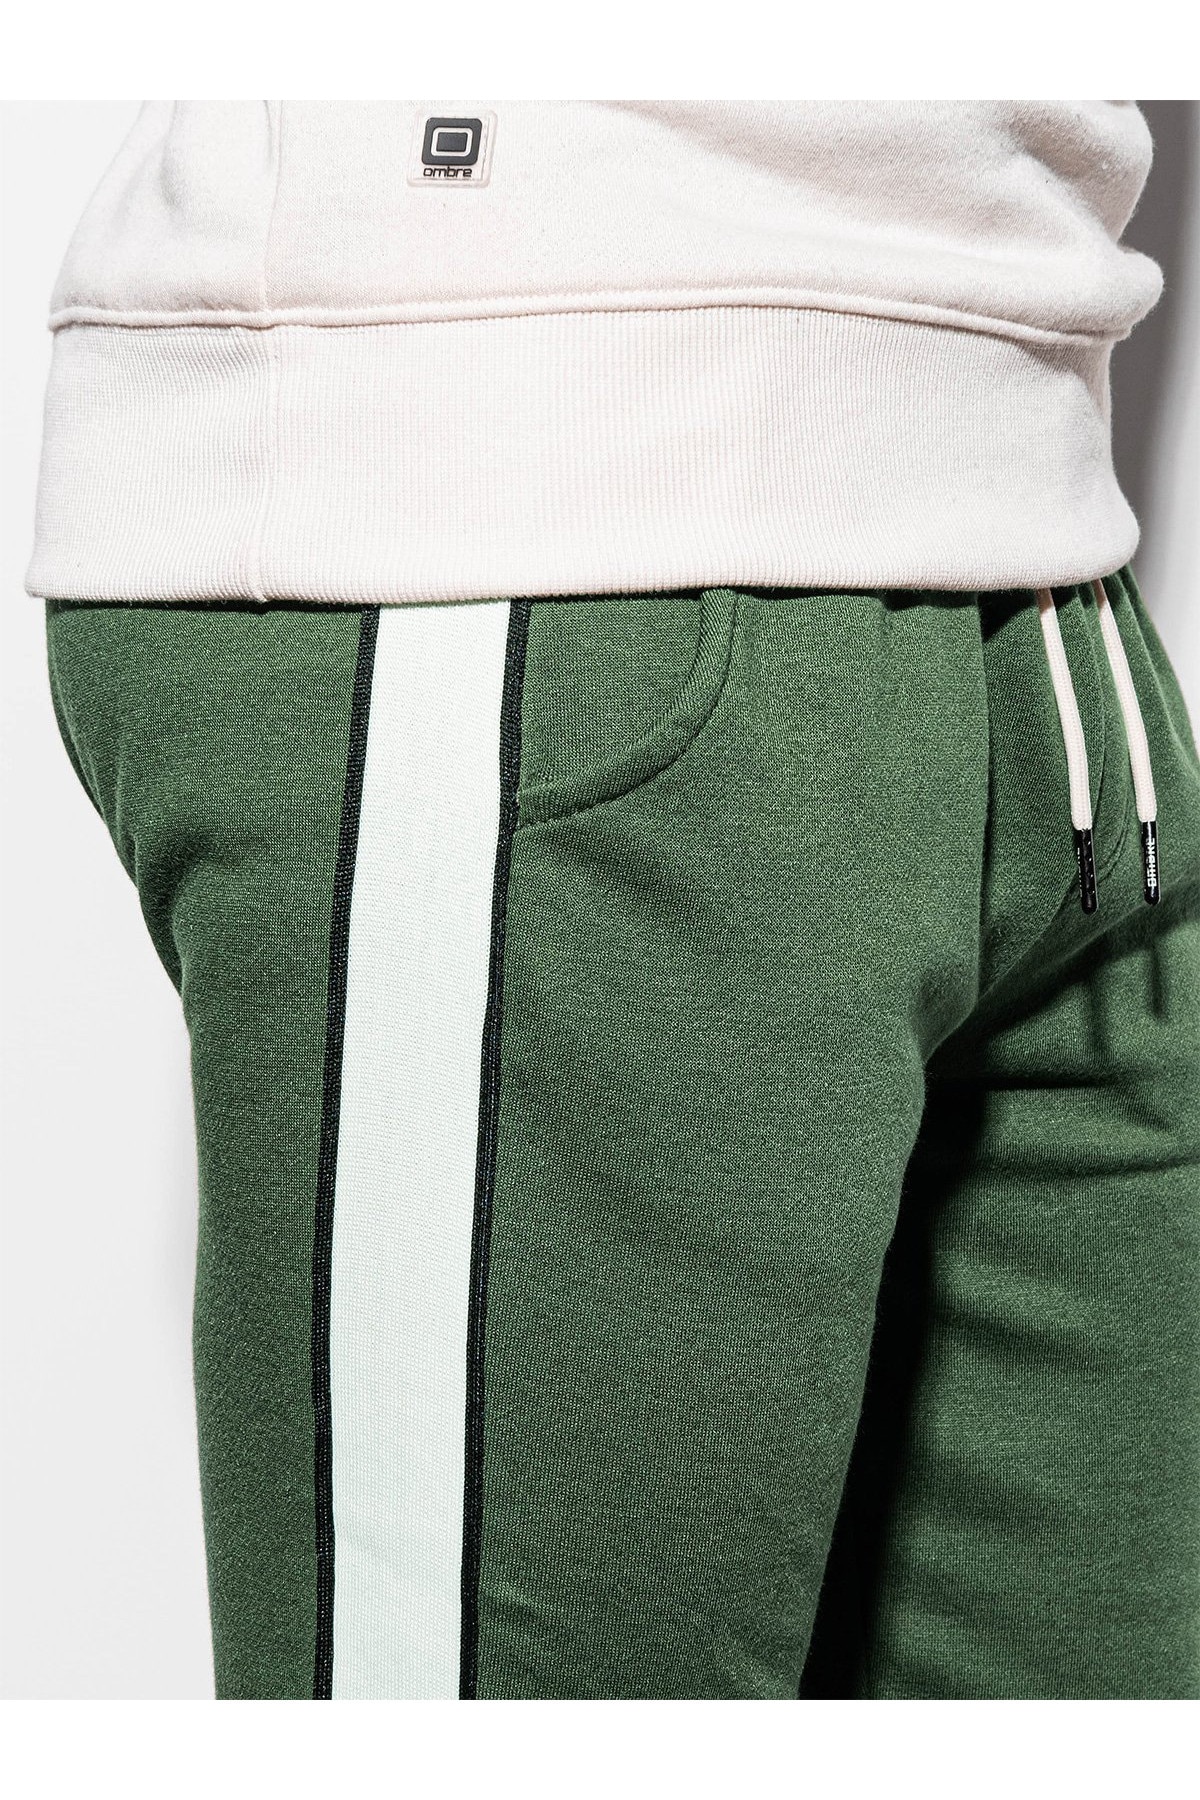 Pantalon de Survêtement Homme Blanc OZONEE JS/XW01Z